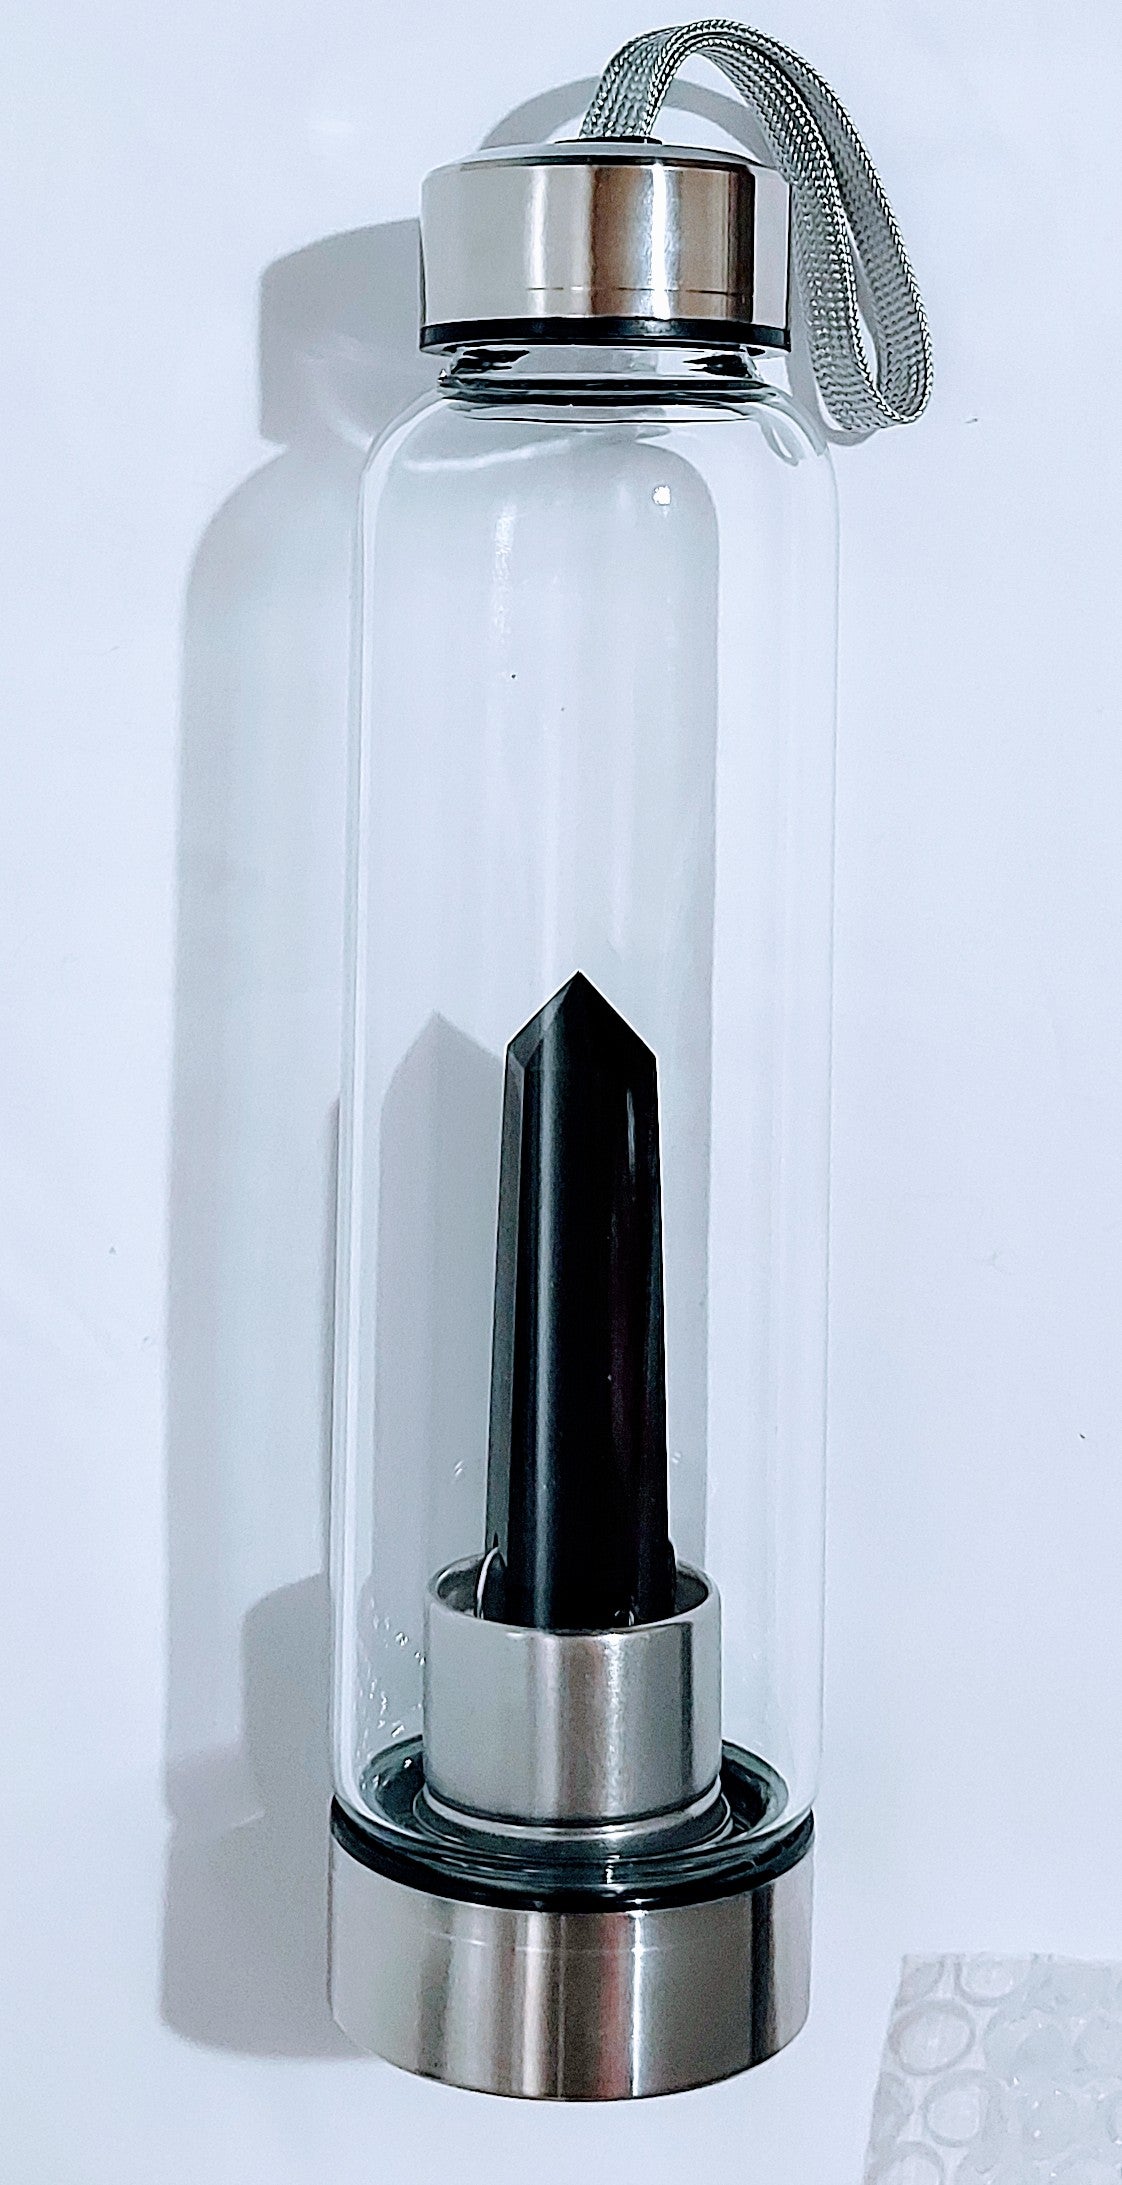 Crystal Balance Water Bottle - Black Obsidian